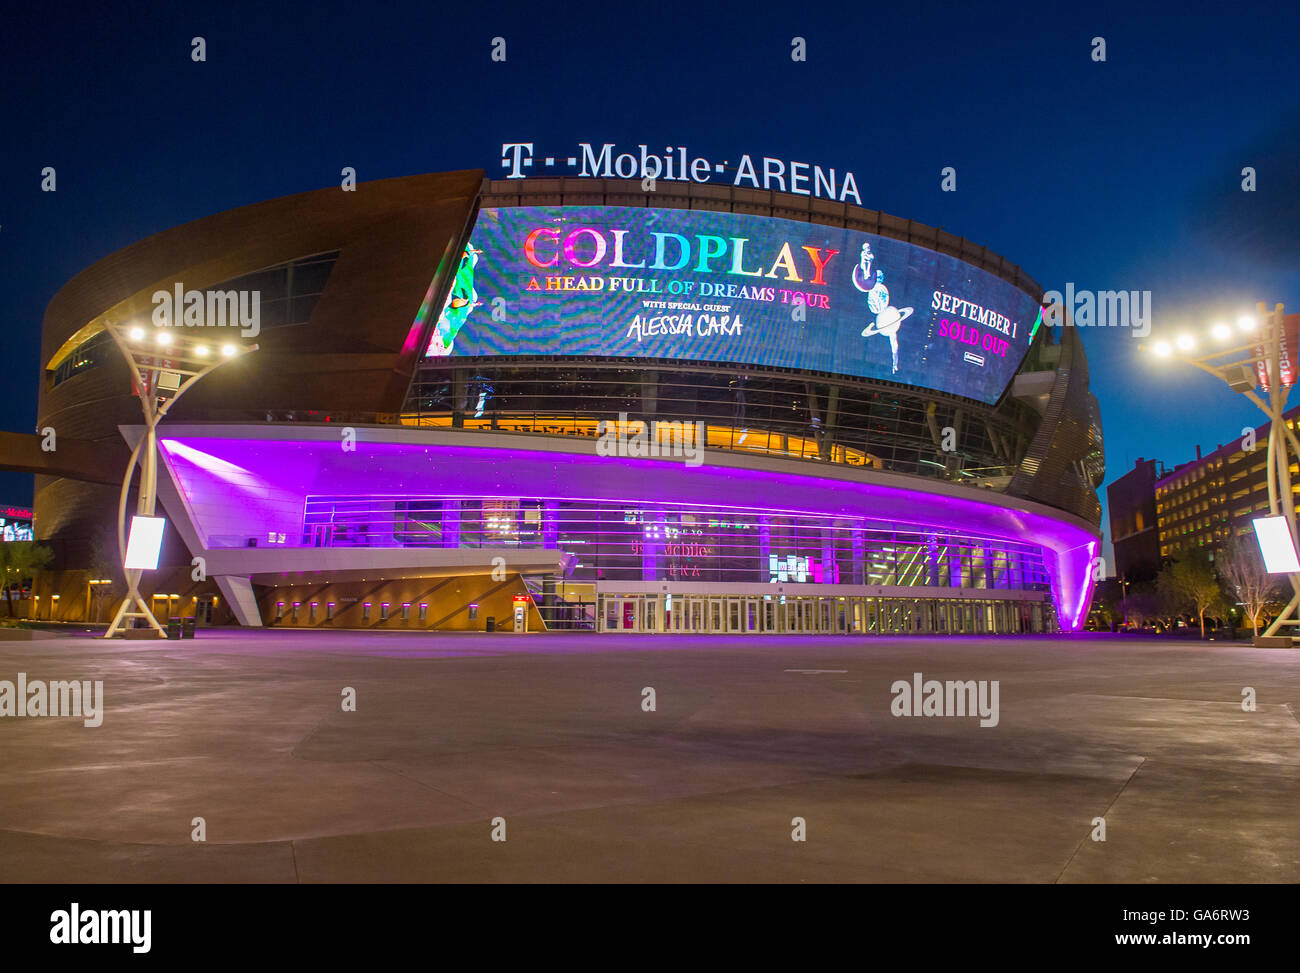 El T-Mobile arena de Las Vegas Foto de stock